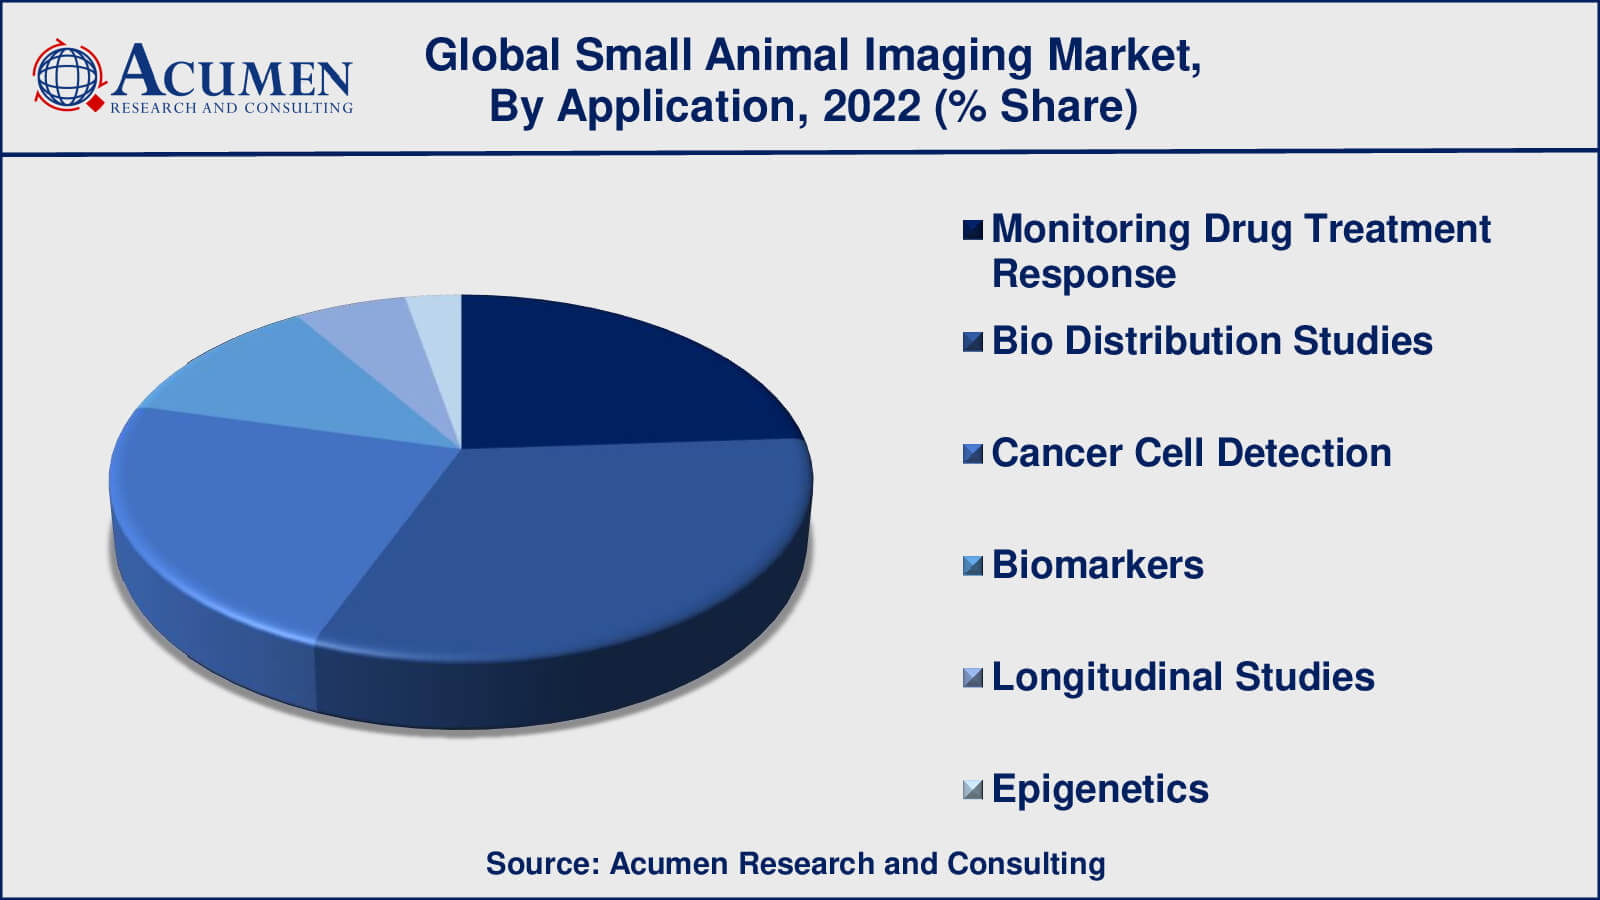 Small Animal Imaging Market Drivers